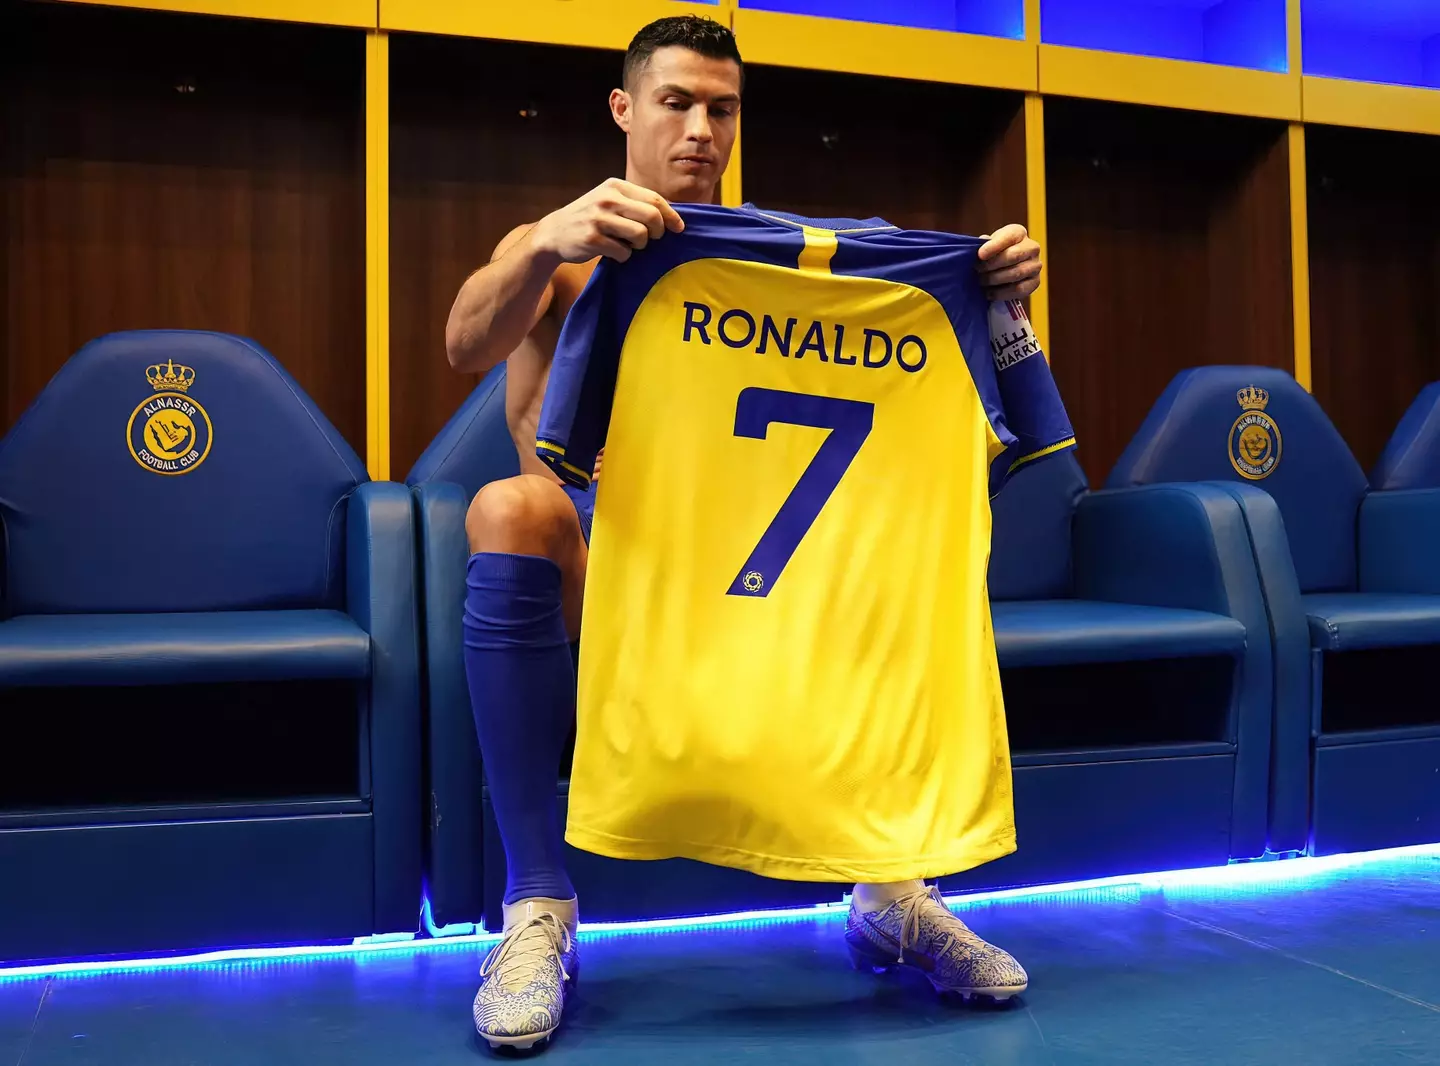 Ronaldo checks out his new shirt. Image: Alamy